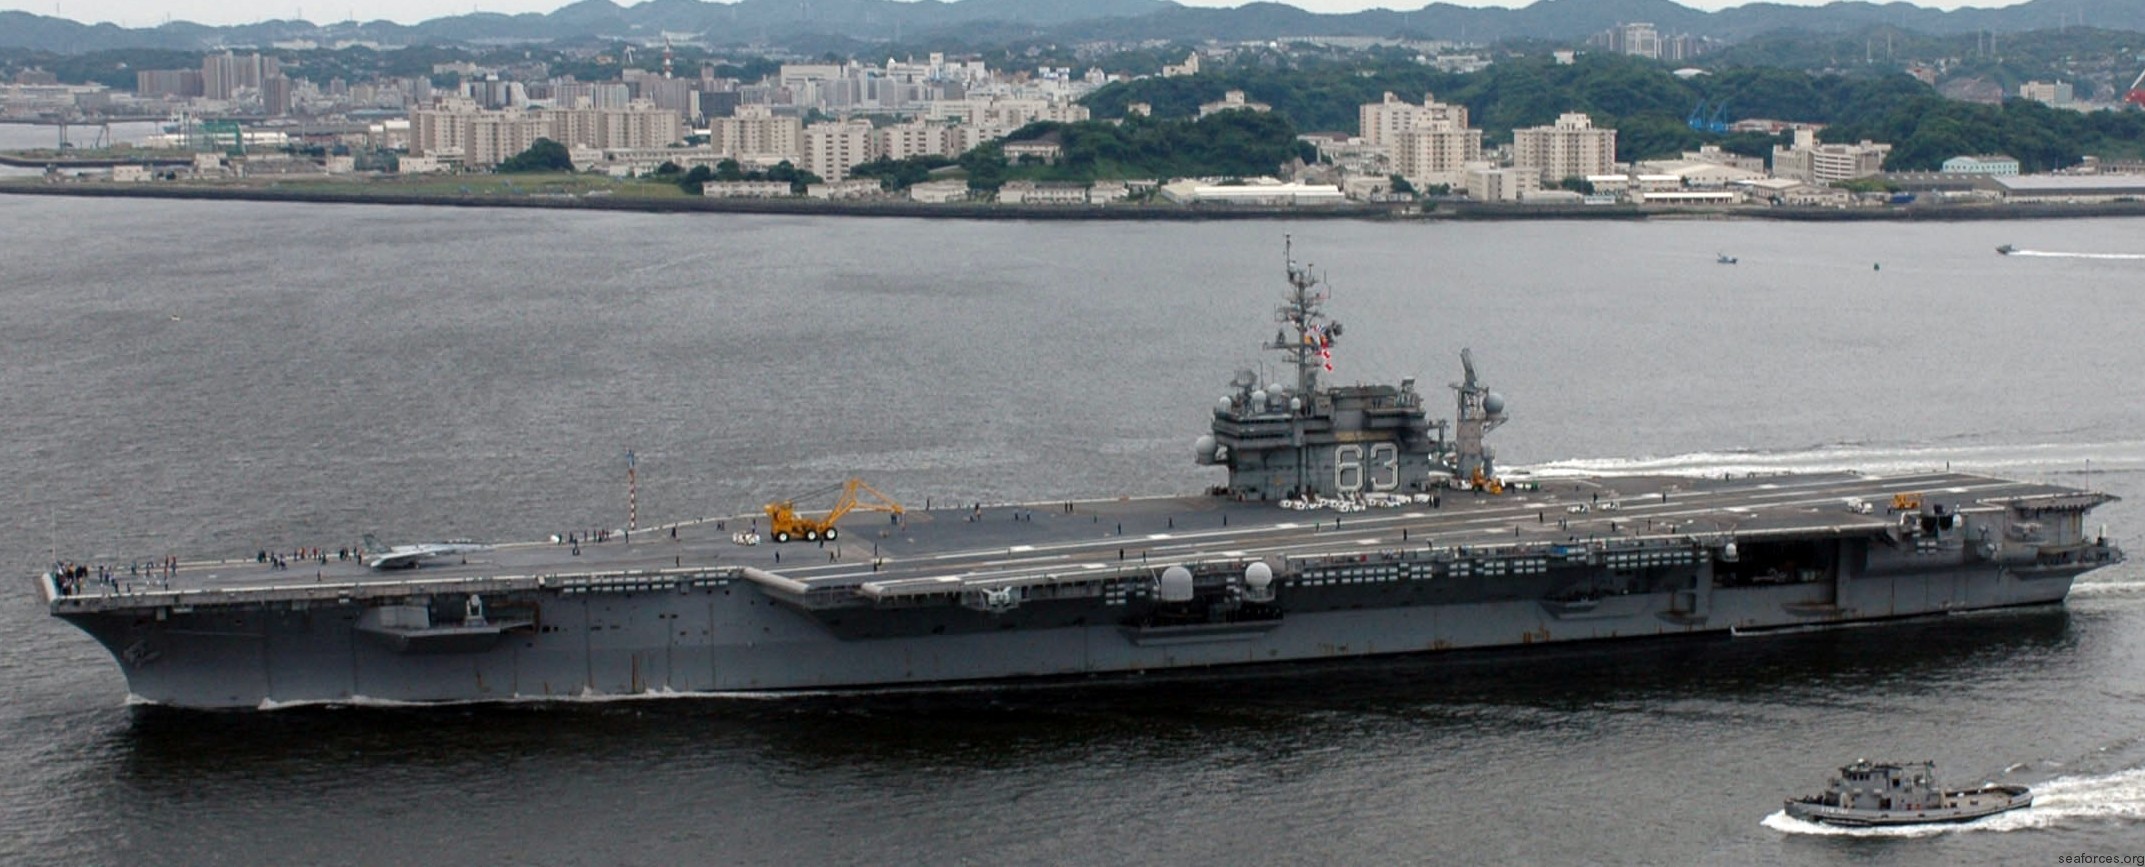 cv-63 uss kitty hawk aircraft carrier us navy 135 yokosuka